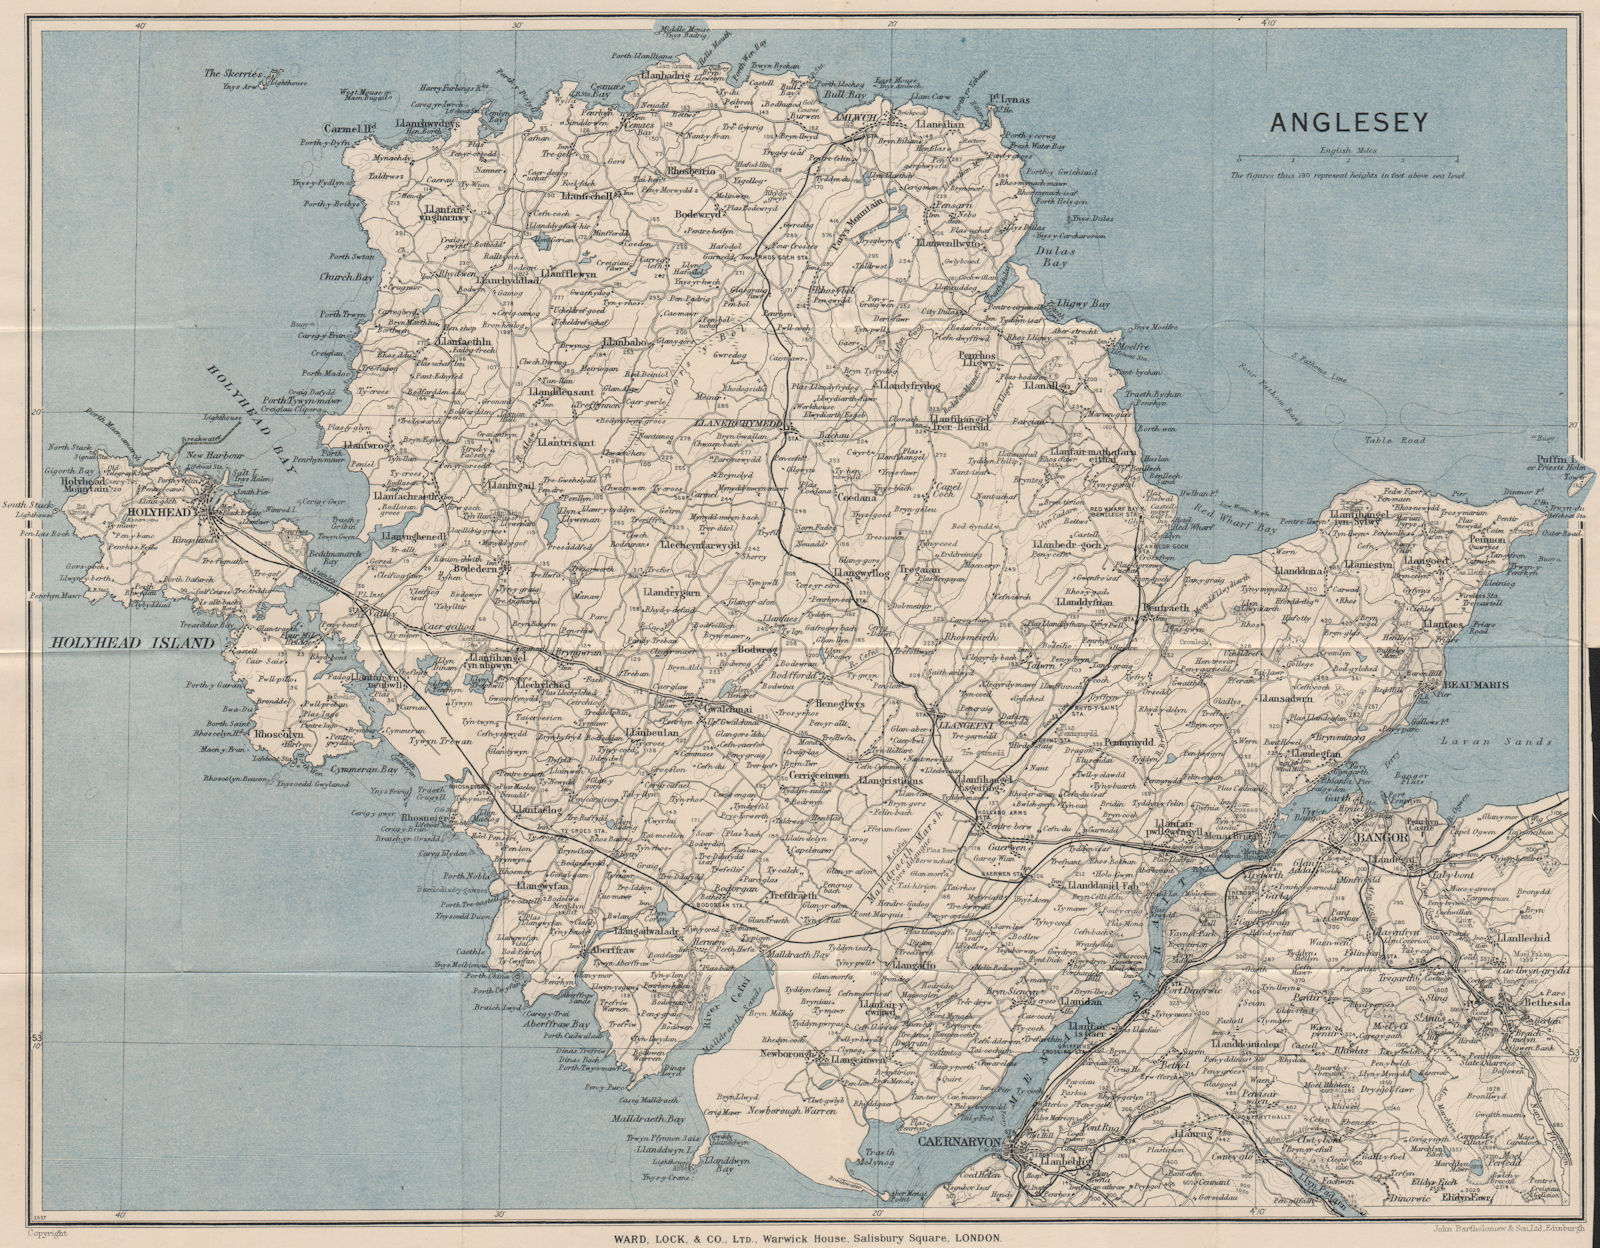 ANGLESEY. Menai Strait Holyhead Bangor Beaumaris Caernarvon. WARD LOCK 1937 map